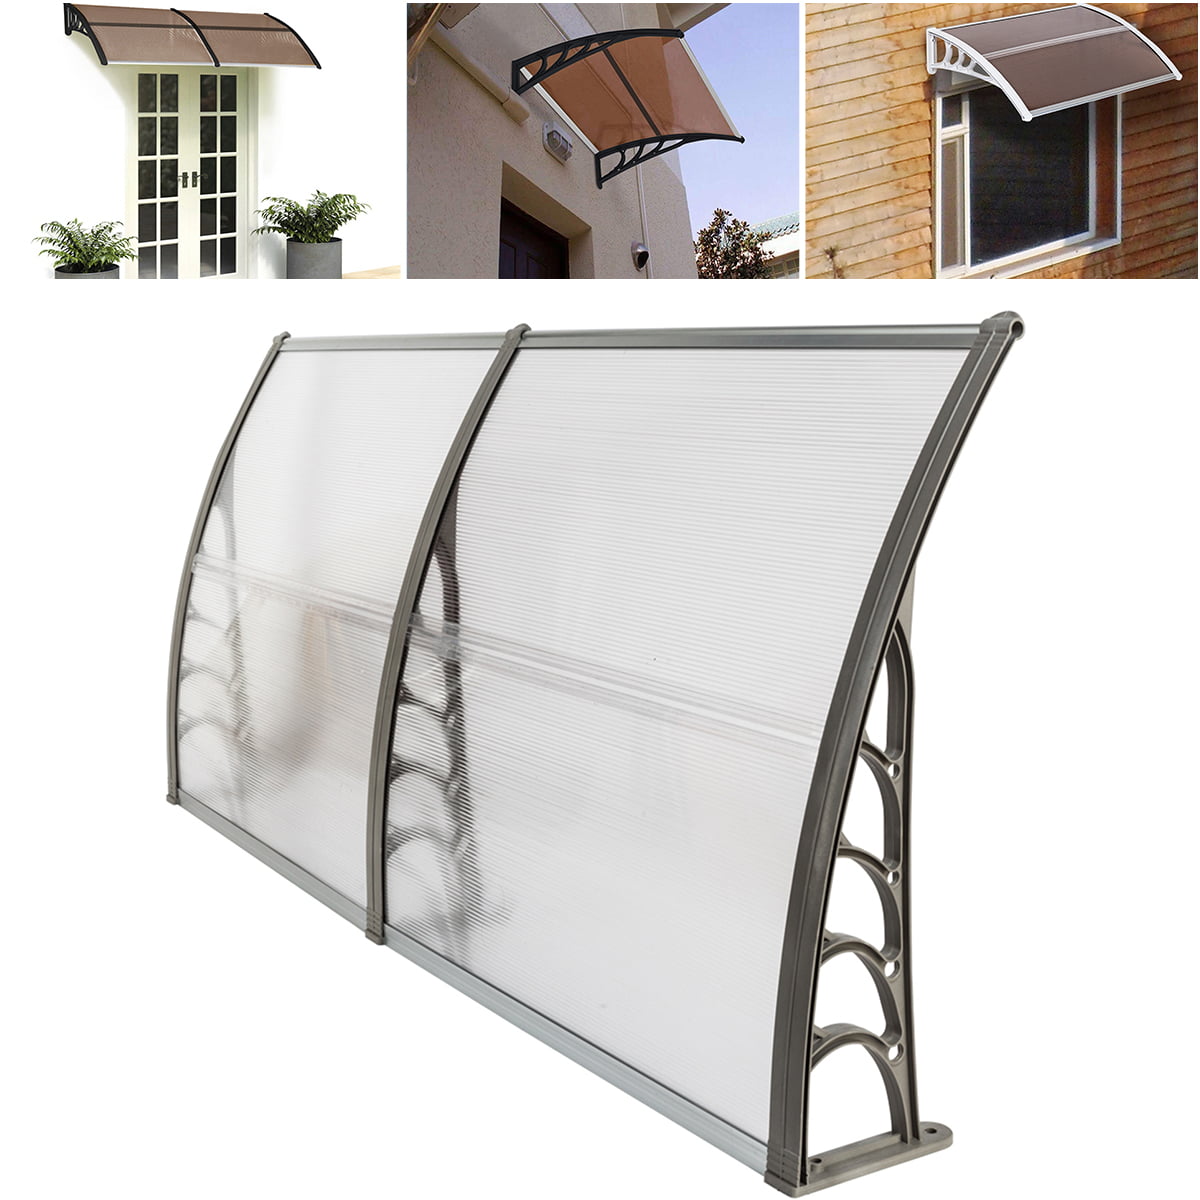 AHD 40"x 32" Window Door Awning Canopy Cover Hollow Sheet Rain Snow Protection 